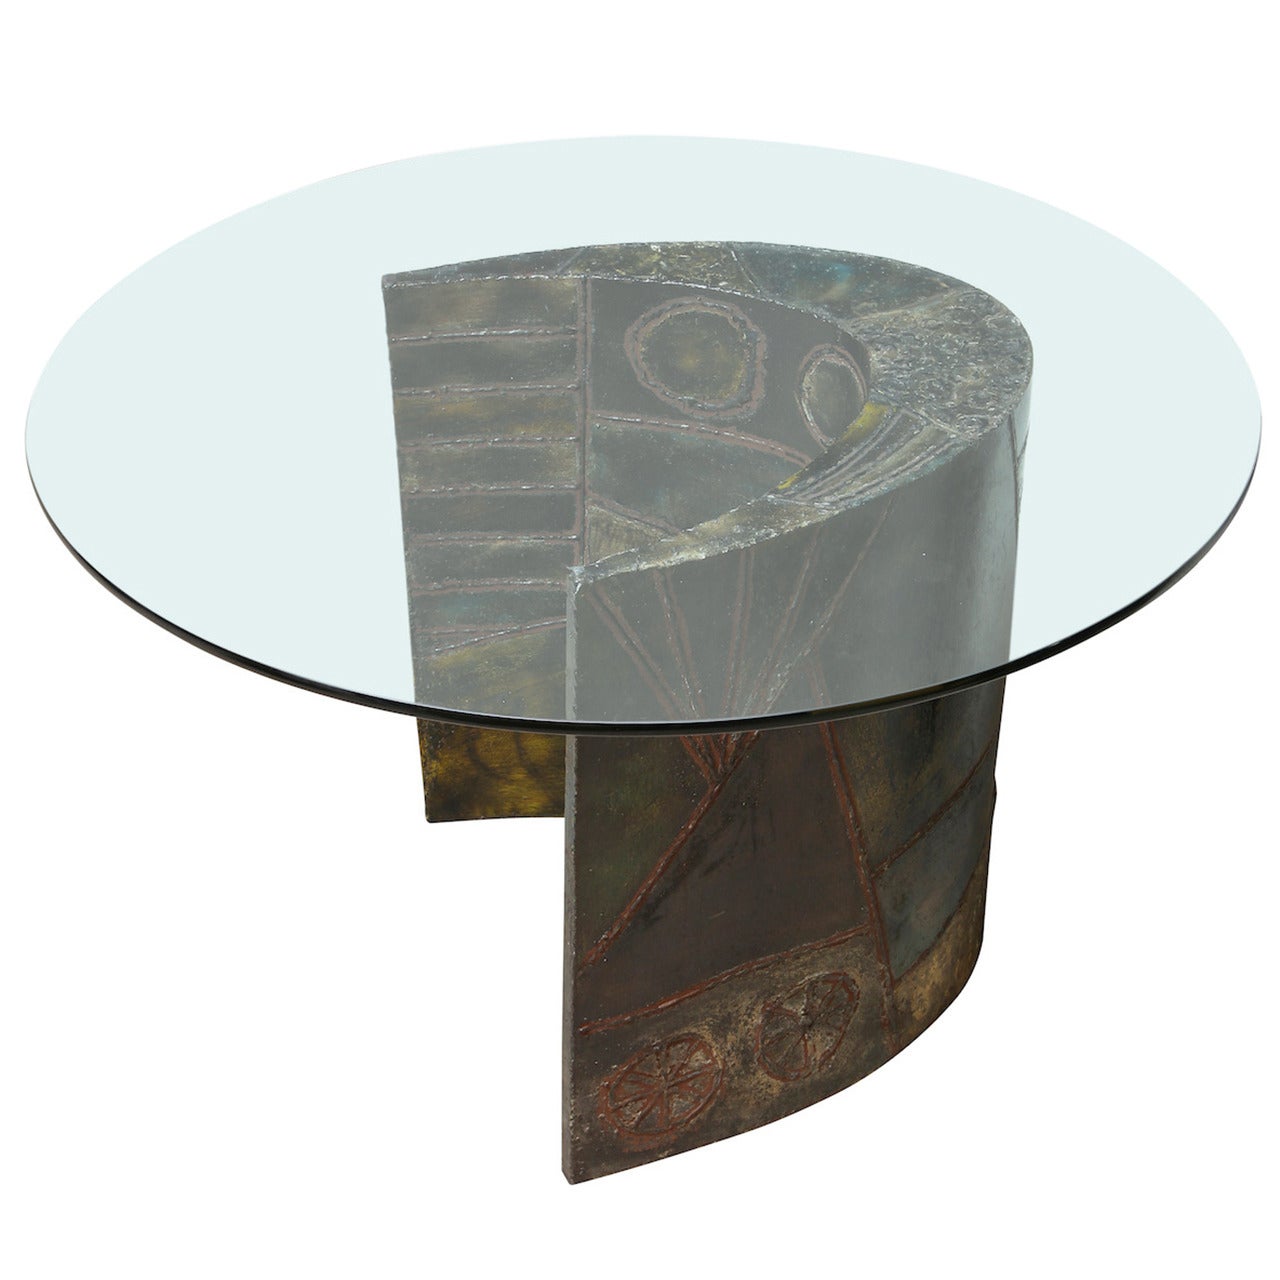 Studio-Made Pedestal Table by Paul Evans